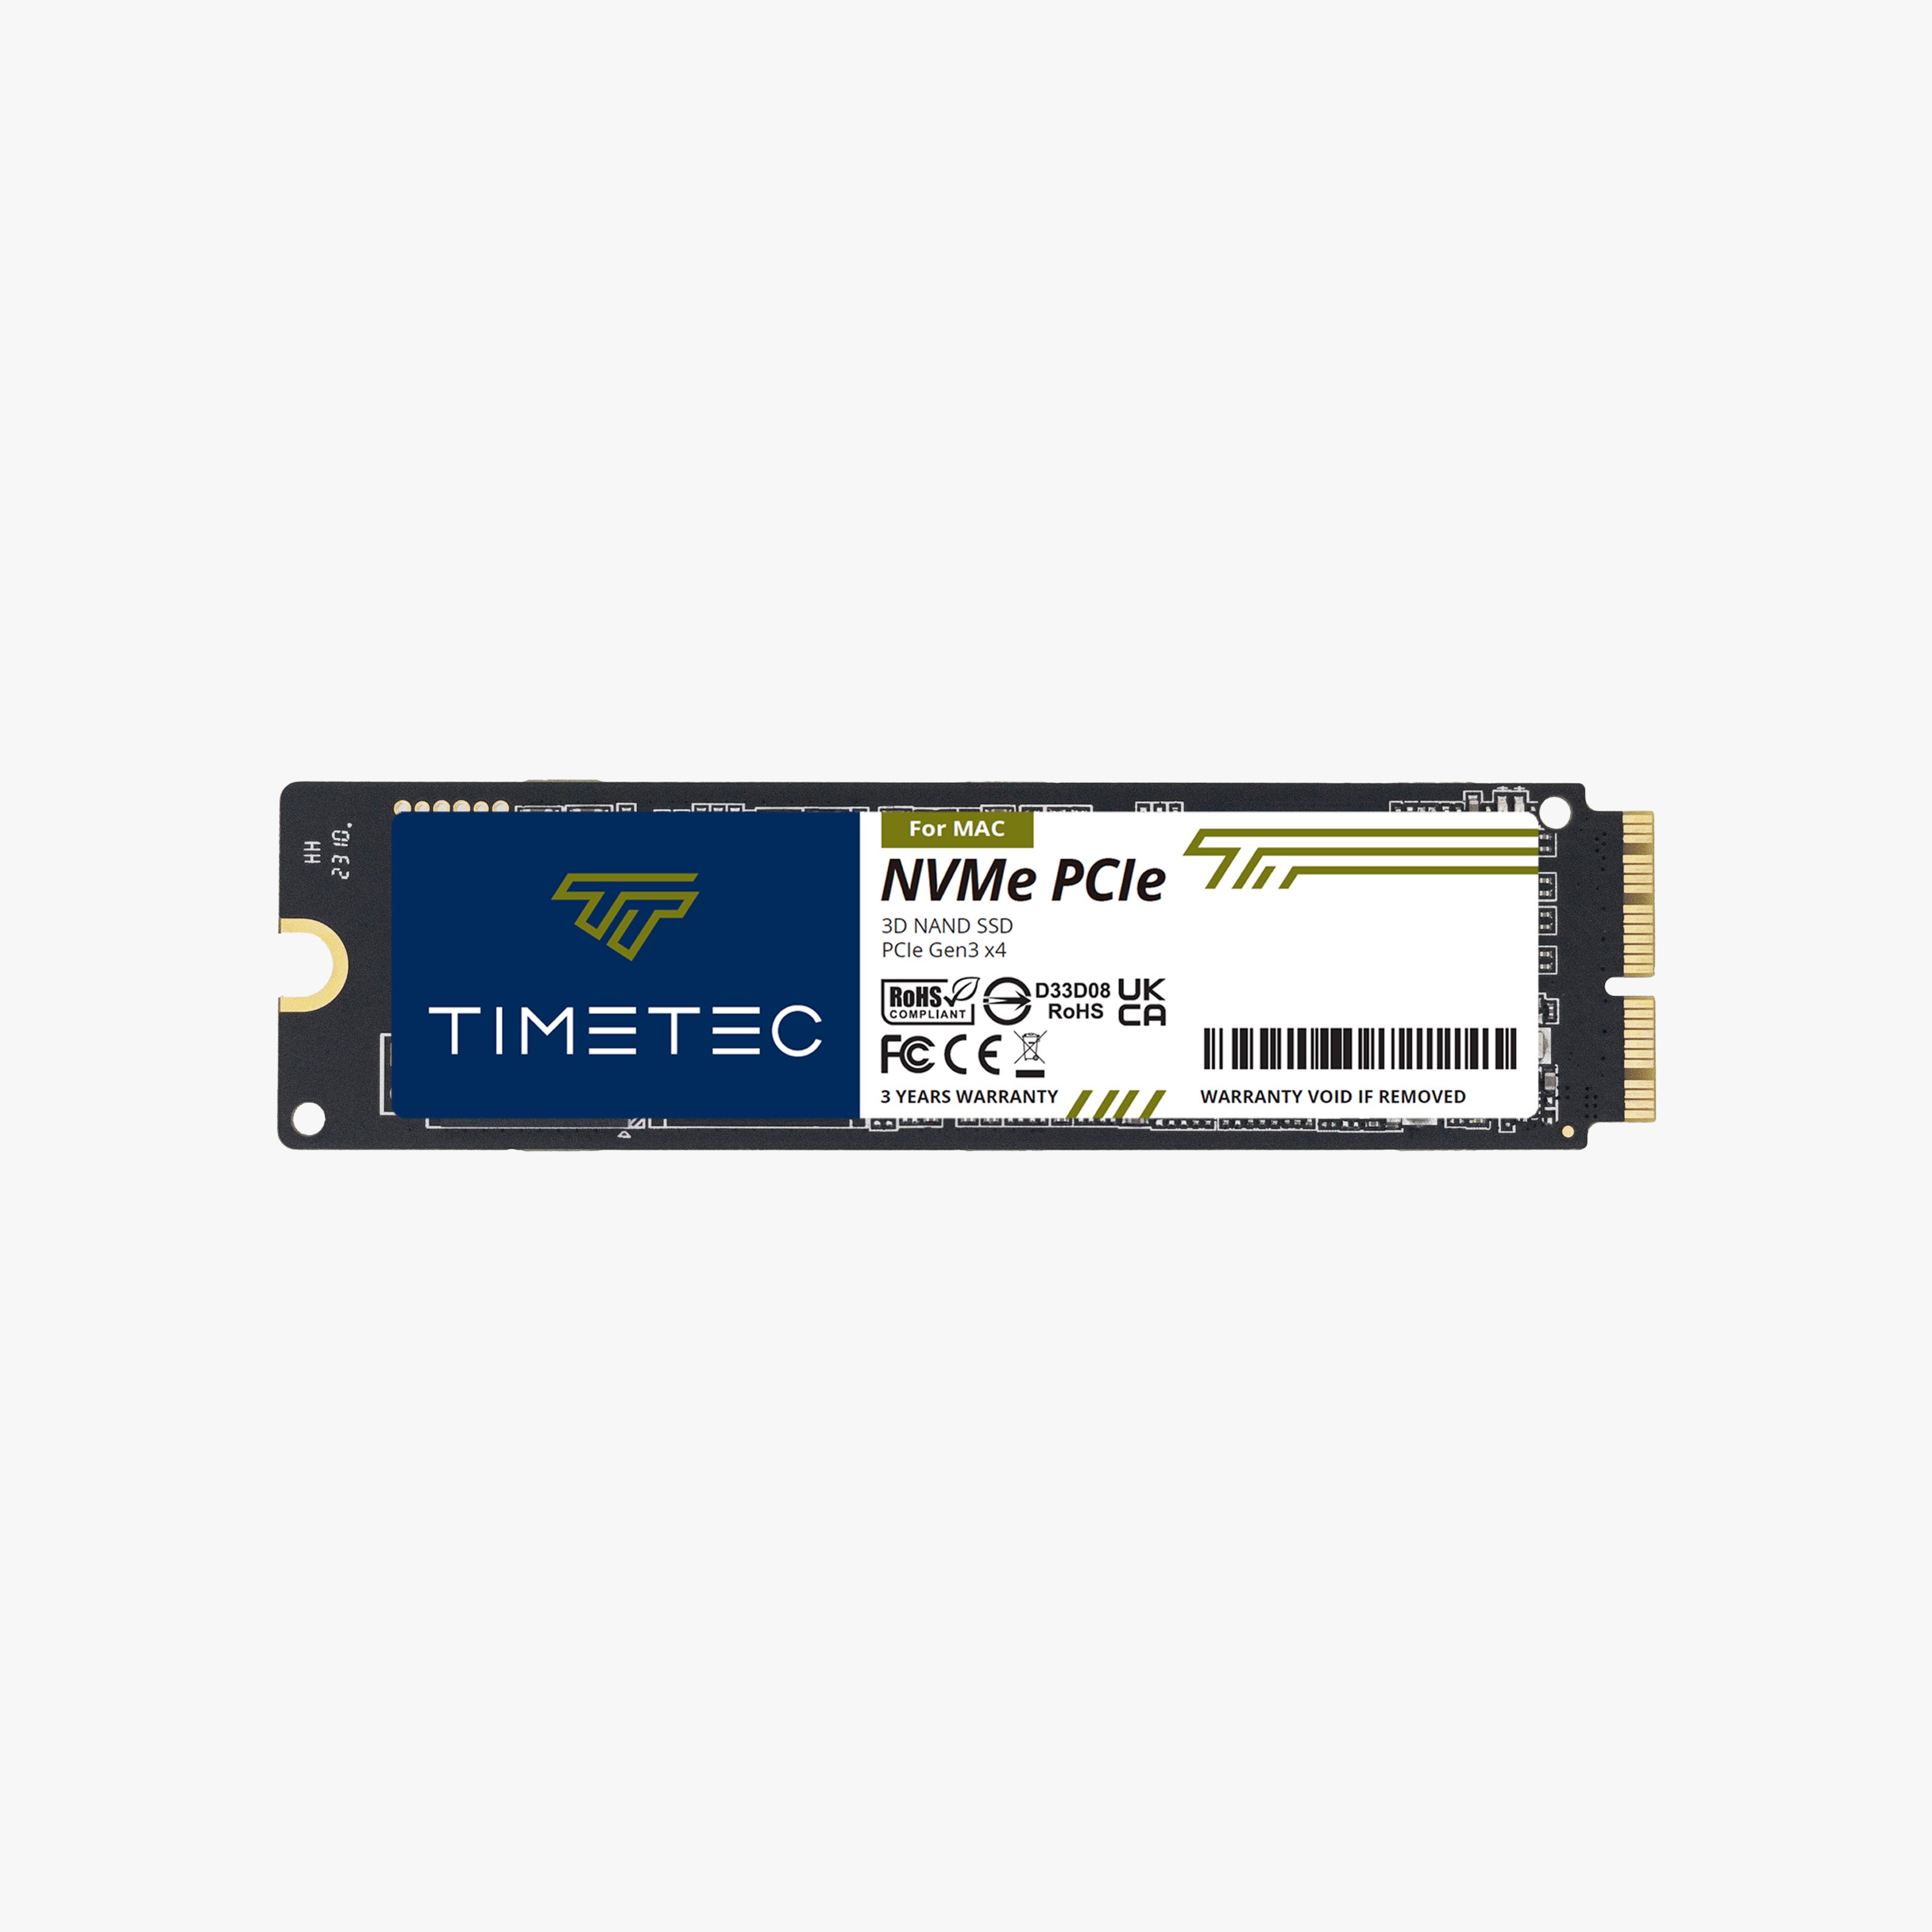 TIMETEC M.2 NVMe PCIe 3.0 SSD For MAC